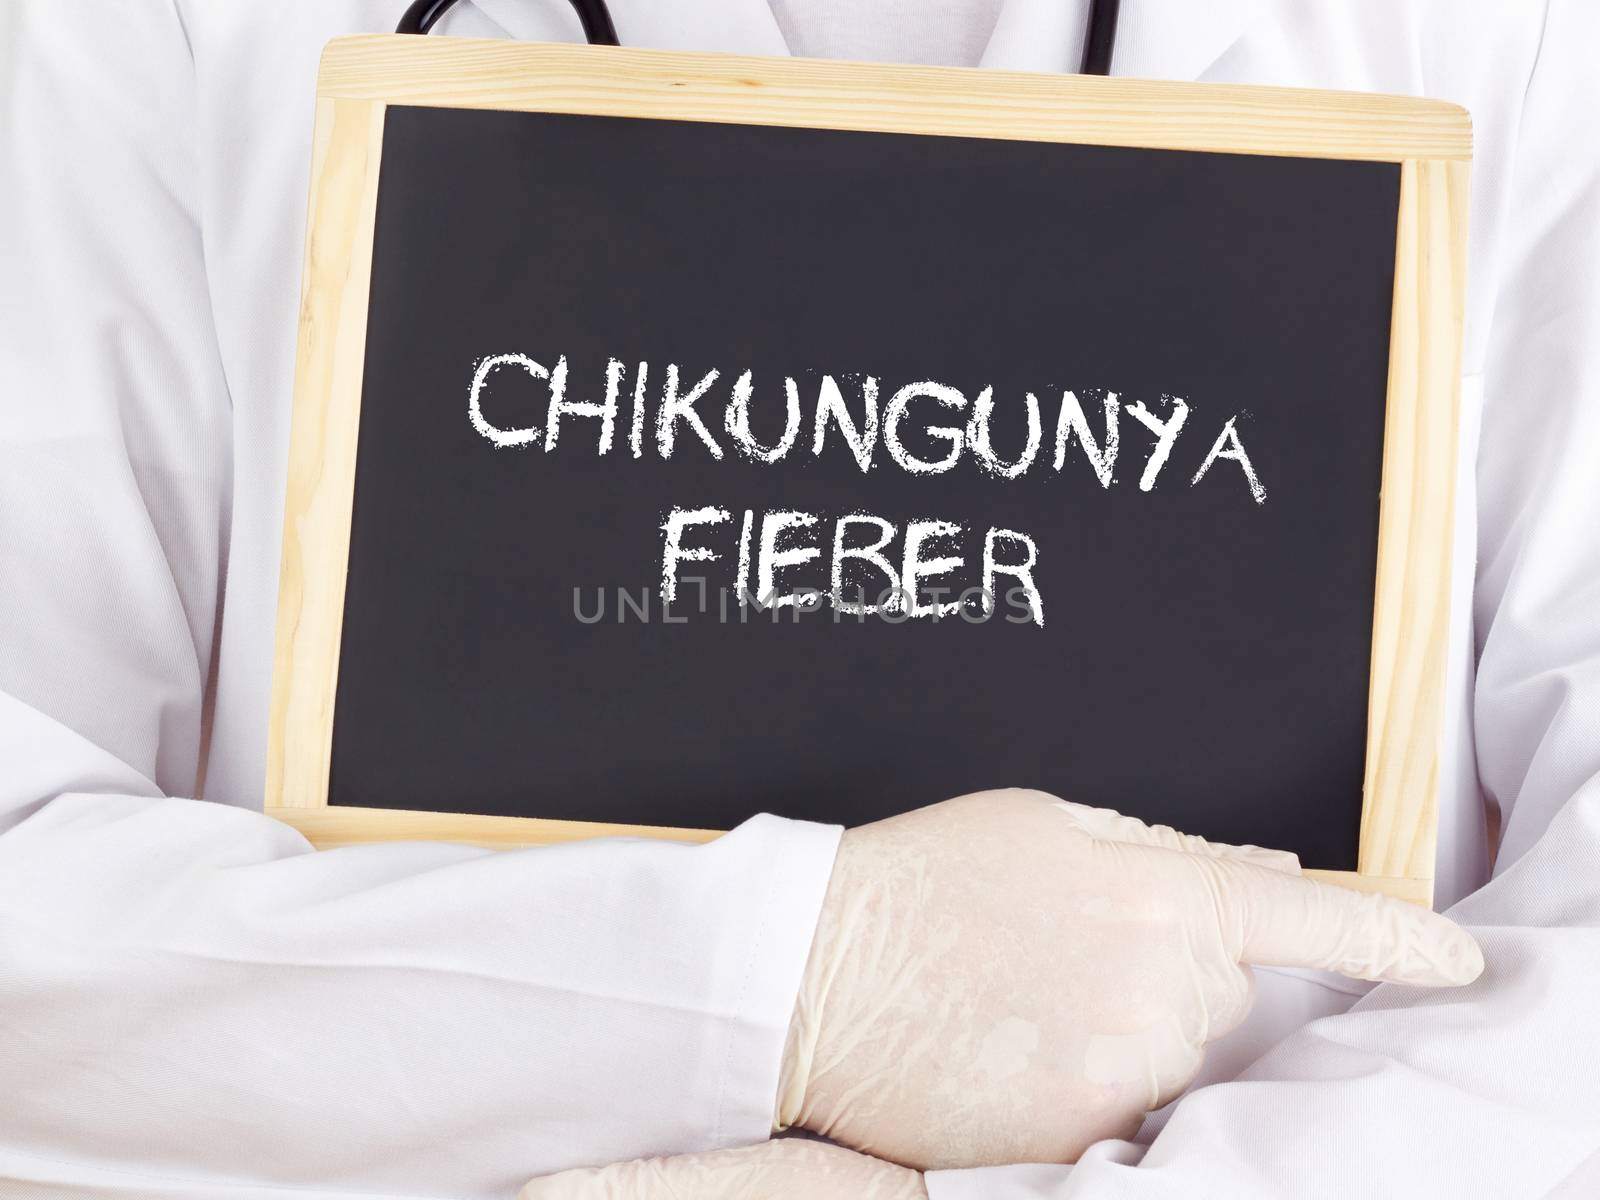 Doctor shows information: Chikungunya fever in german